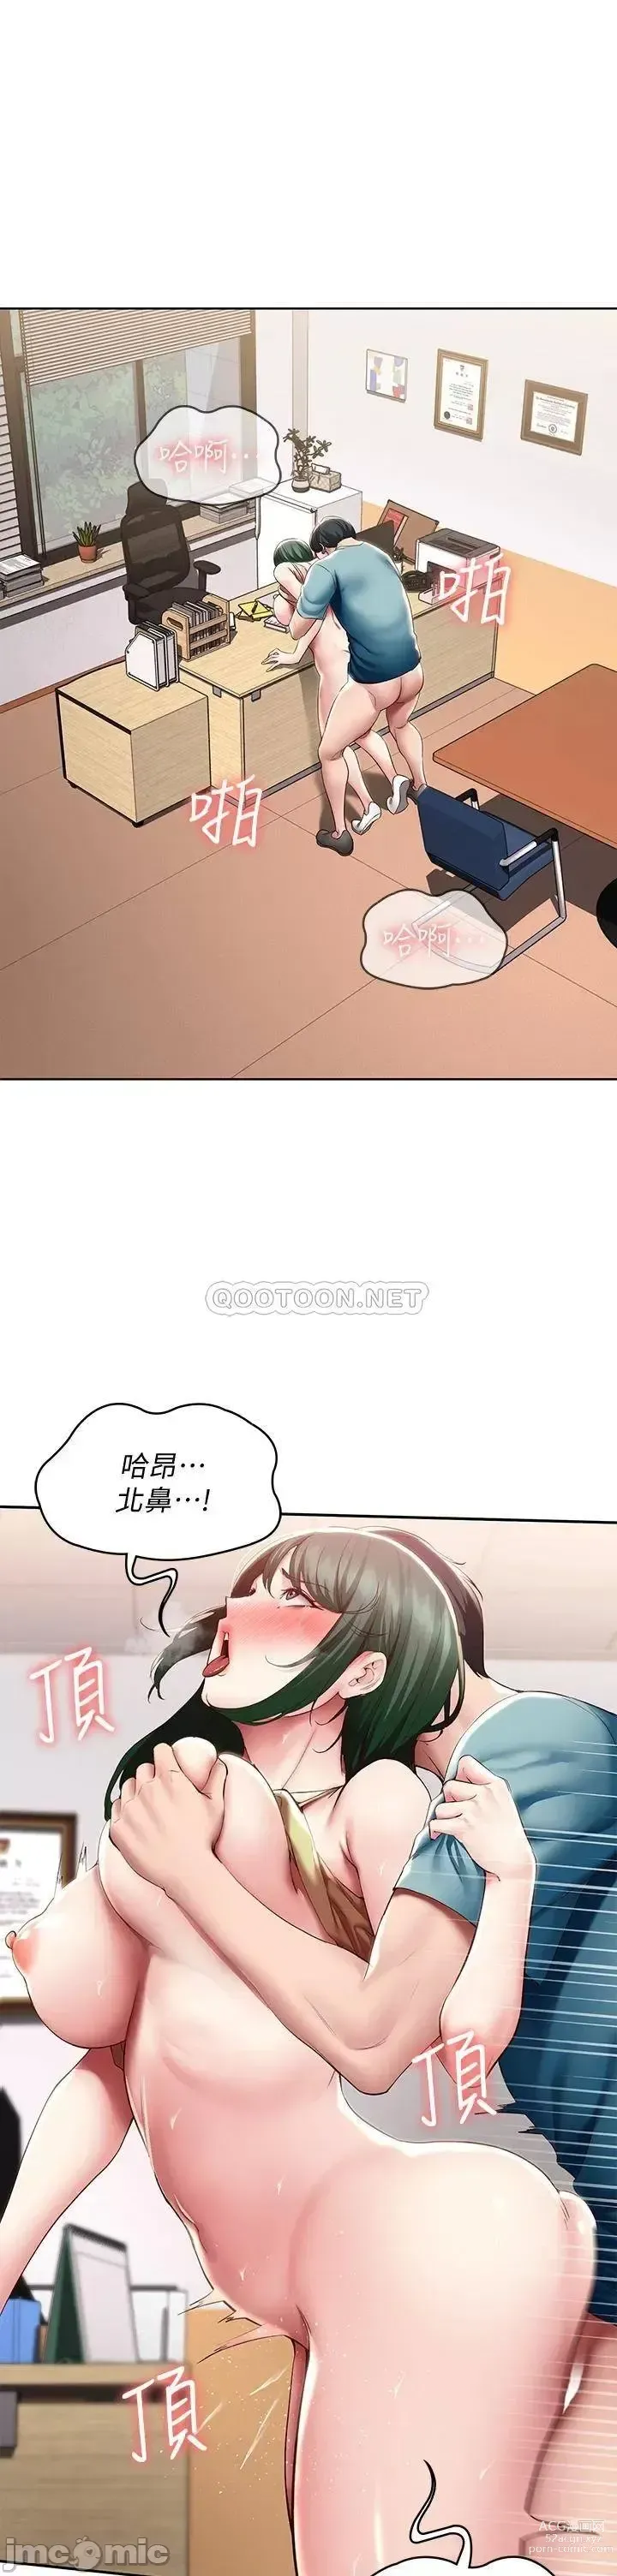 Page 5 of doujinshi 韩漫足交情节汇总5